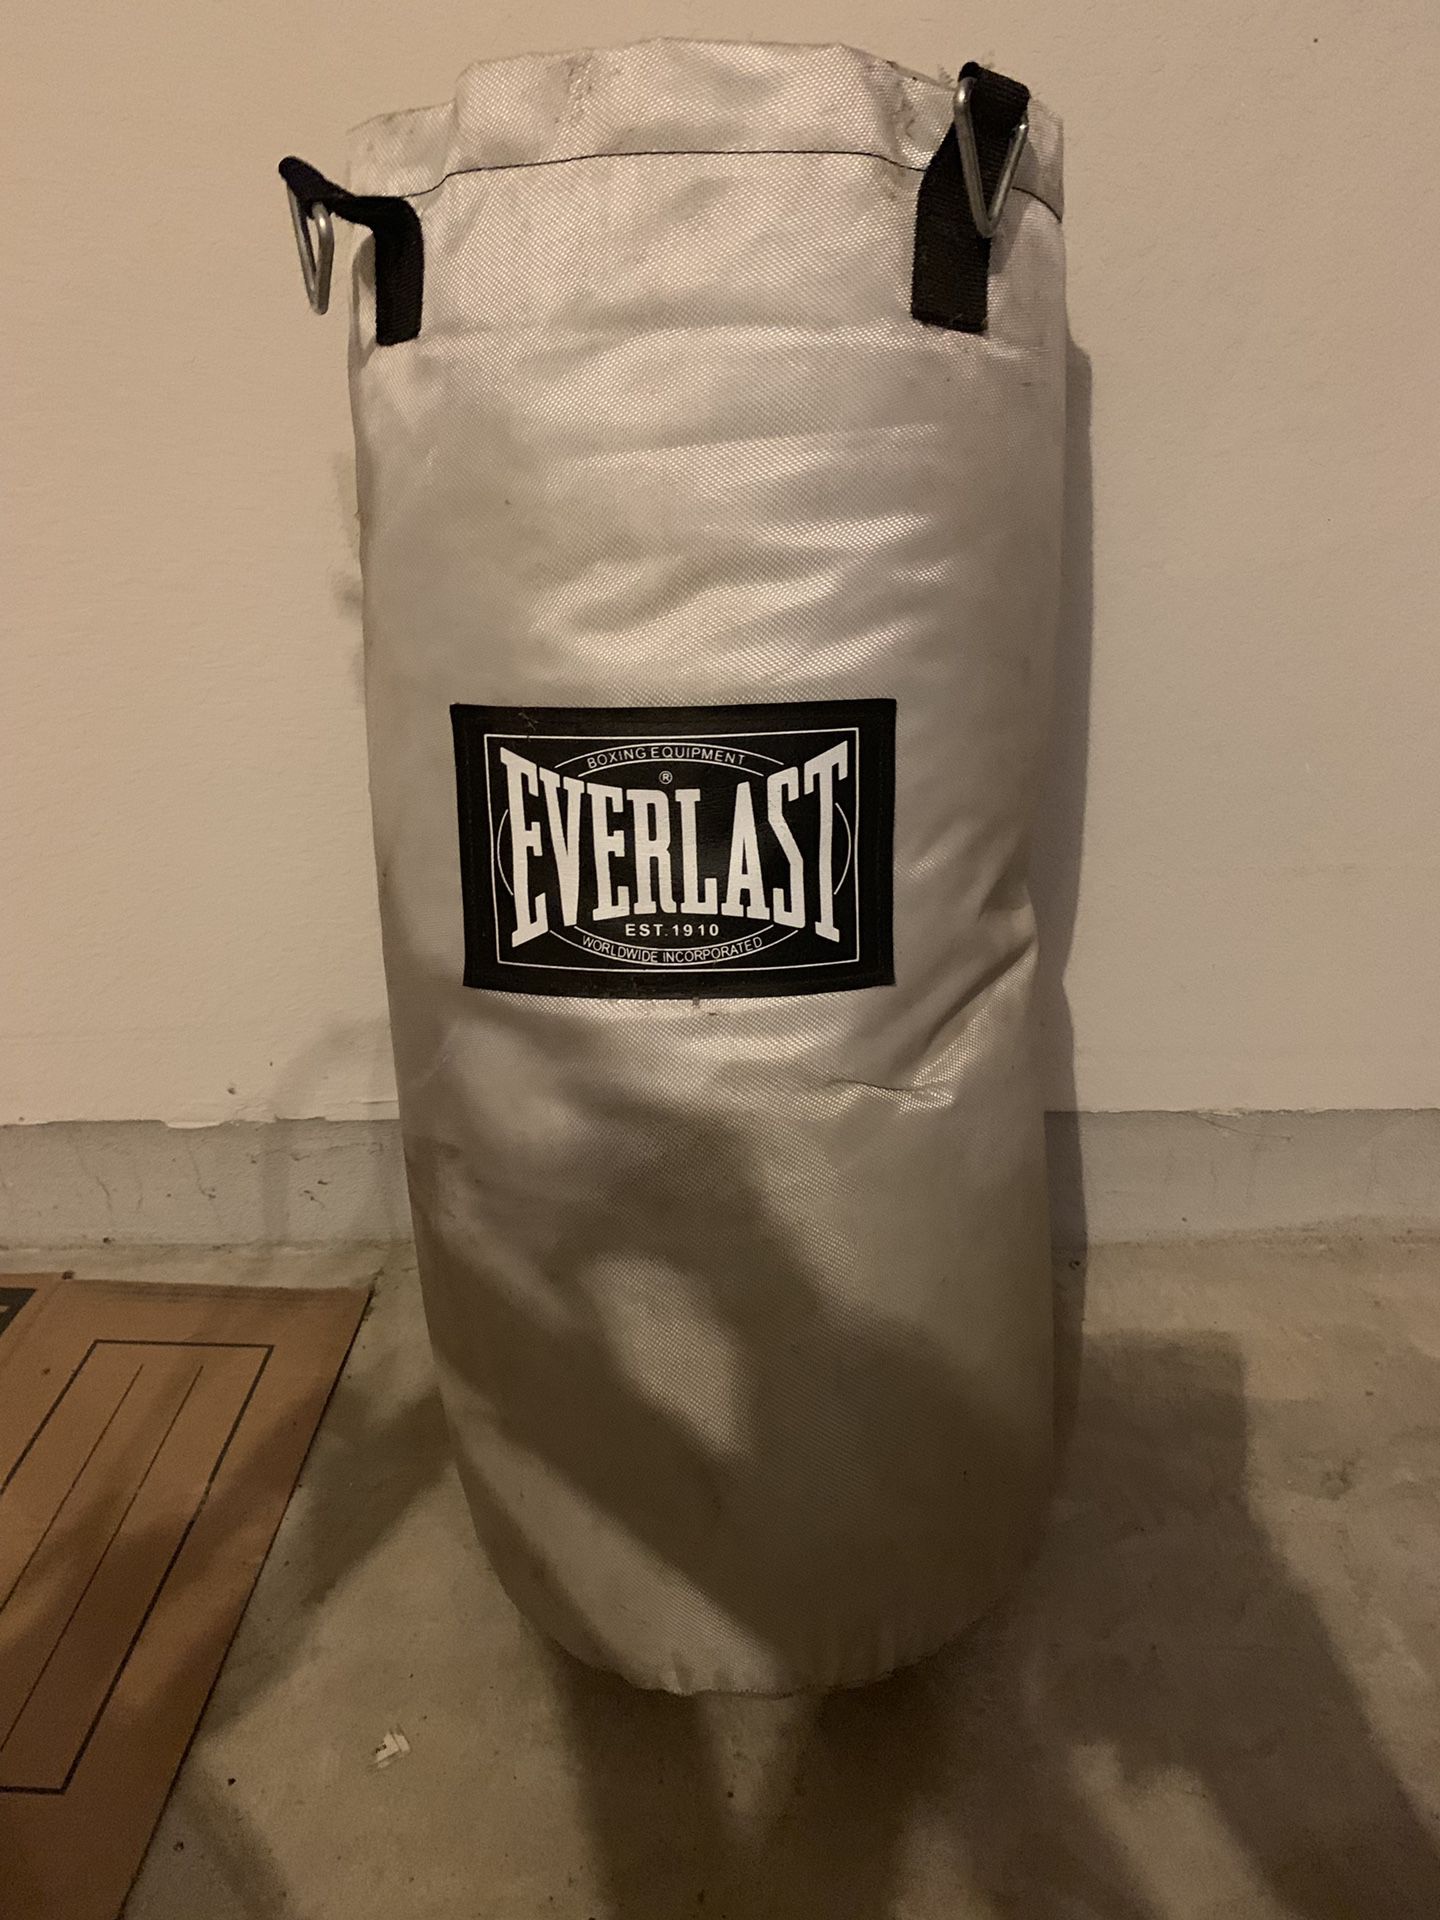 Everlasting punching bag